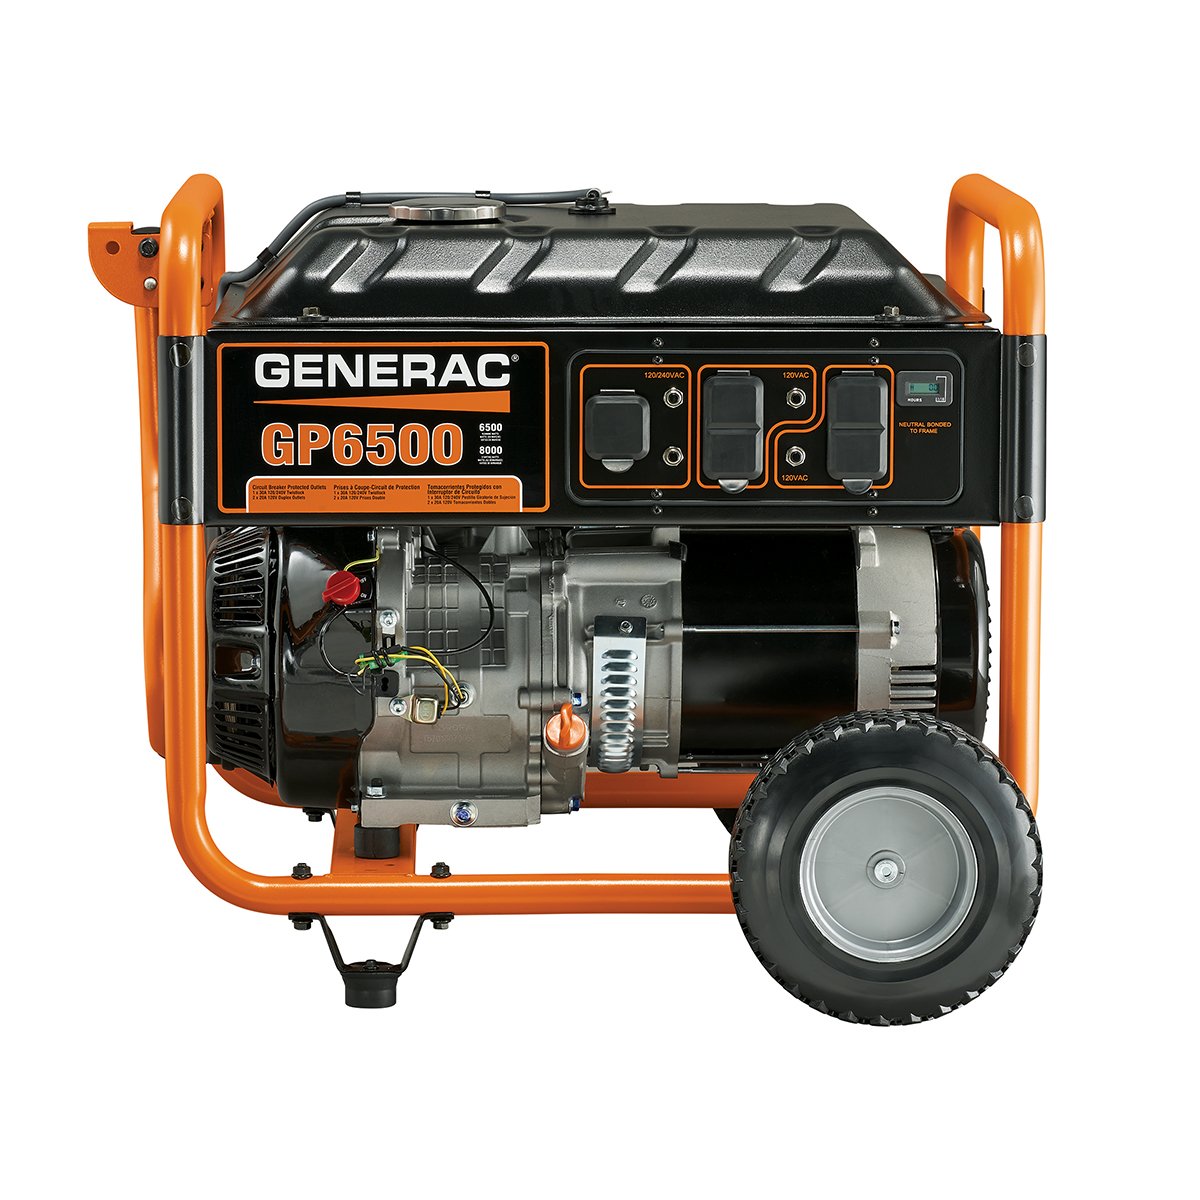 Generac 5940 GP6500 6500W Running/8125W Starting Gas Powered Portable Generator - image 3 of 3